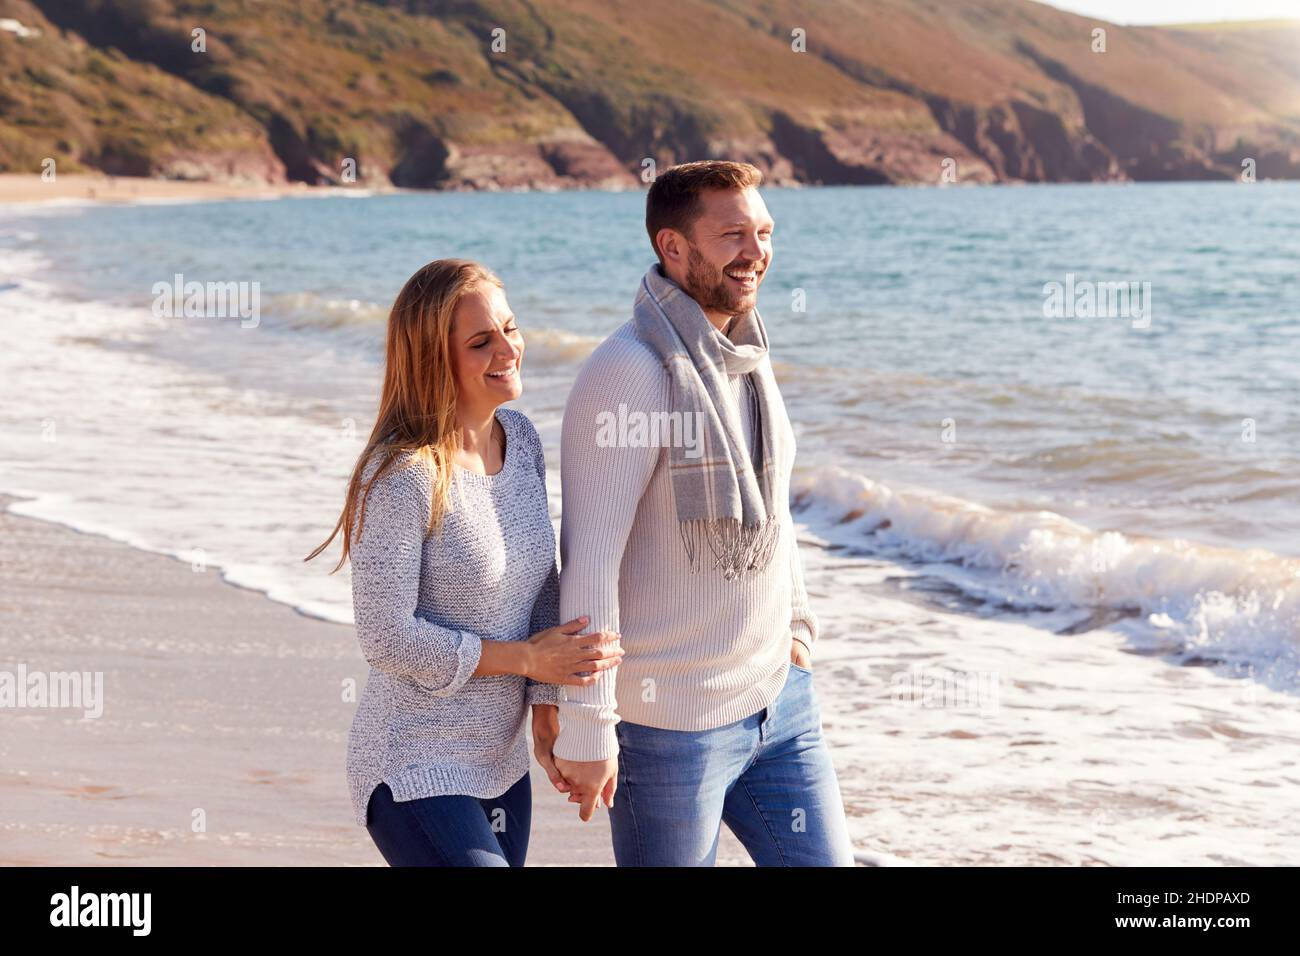 couple, loving, beach walking, pairs, romance Stock Photo